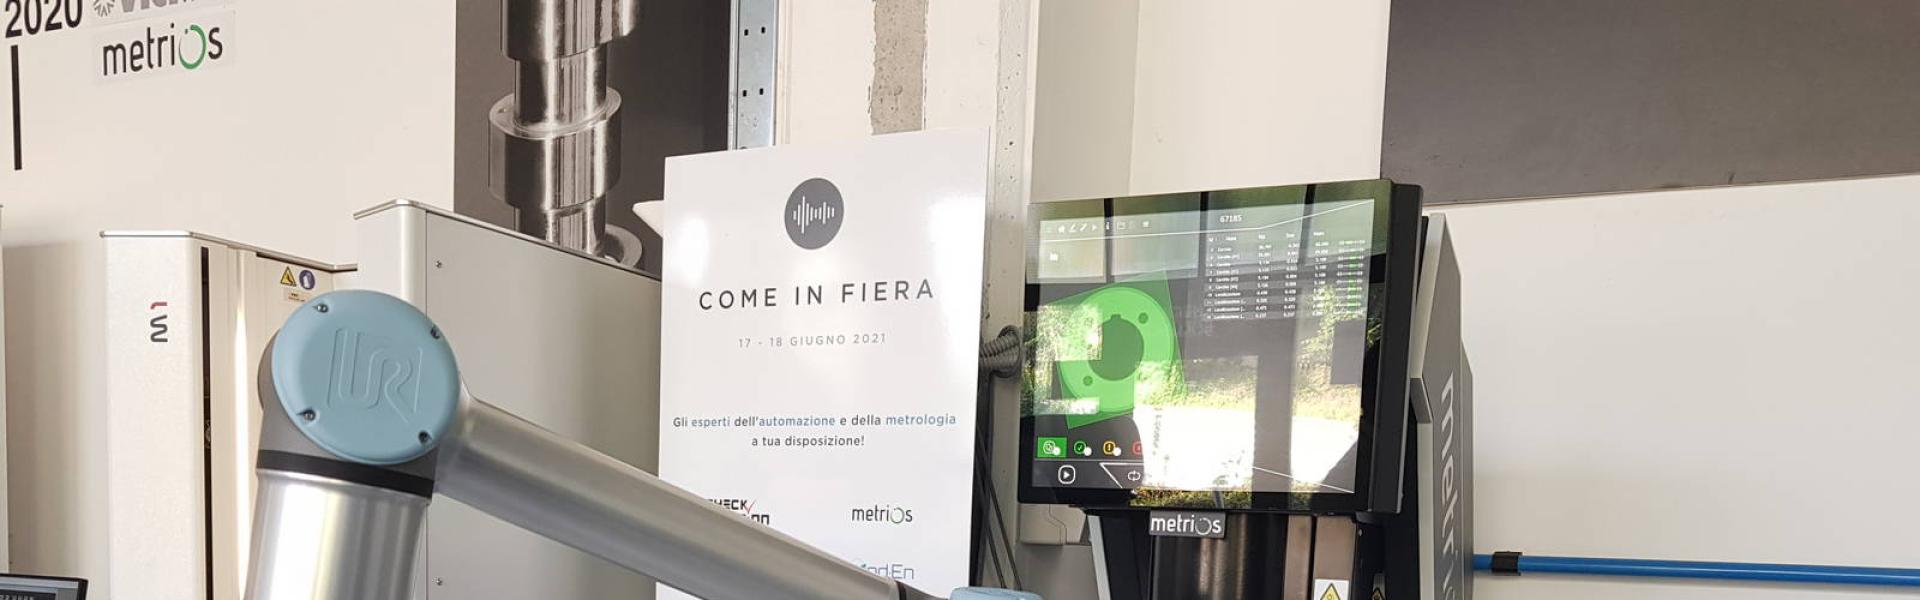 Open House COME IN FIERA 2021 - Turin, Italie